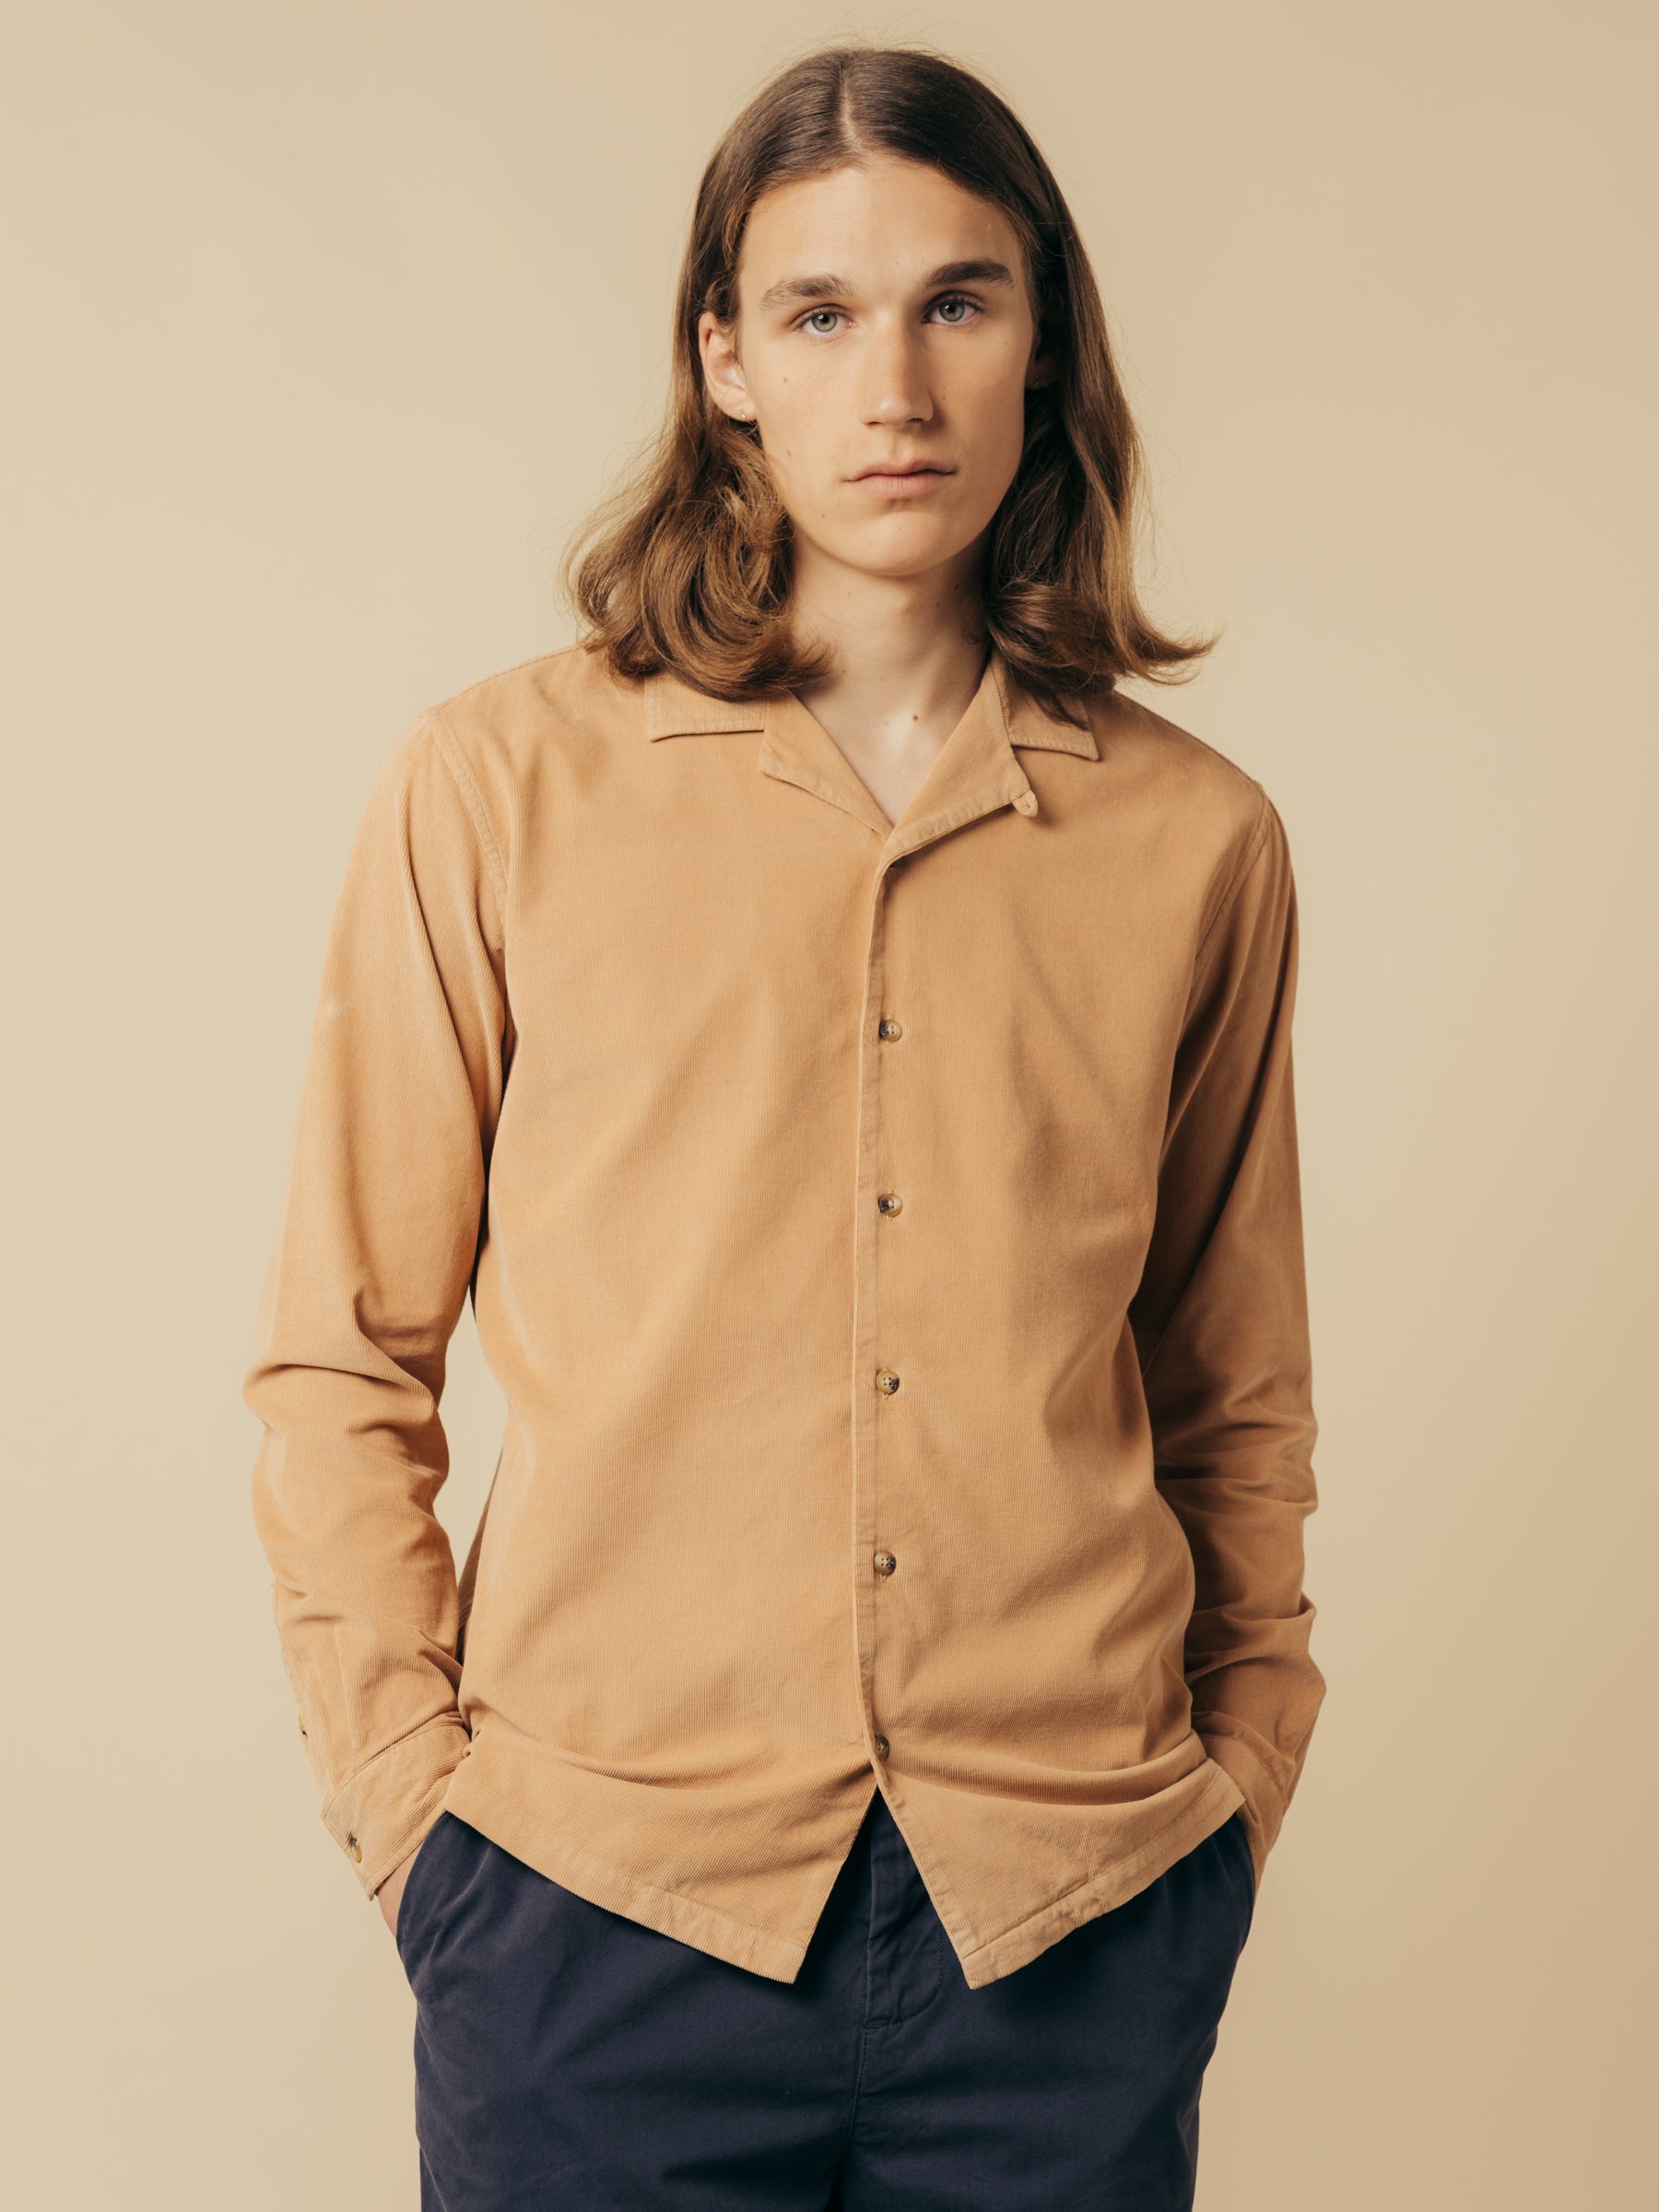 A model wearing the KESTIN Tain Shirt, made from organic cotton corduroy.